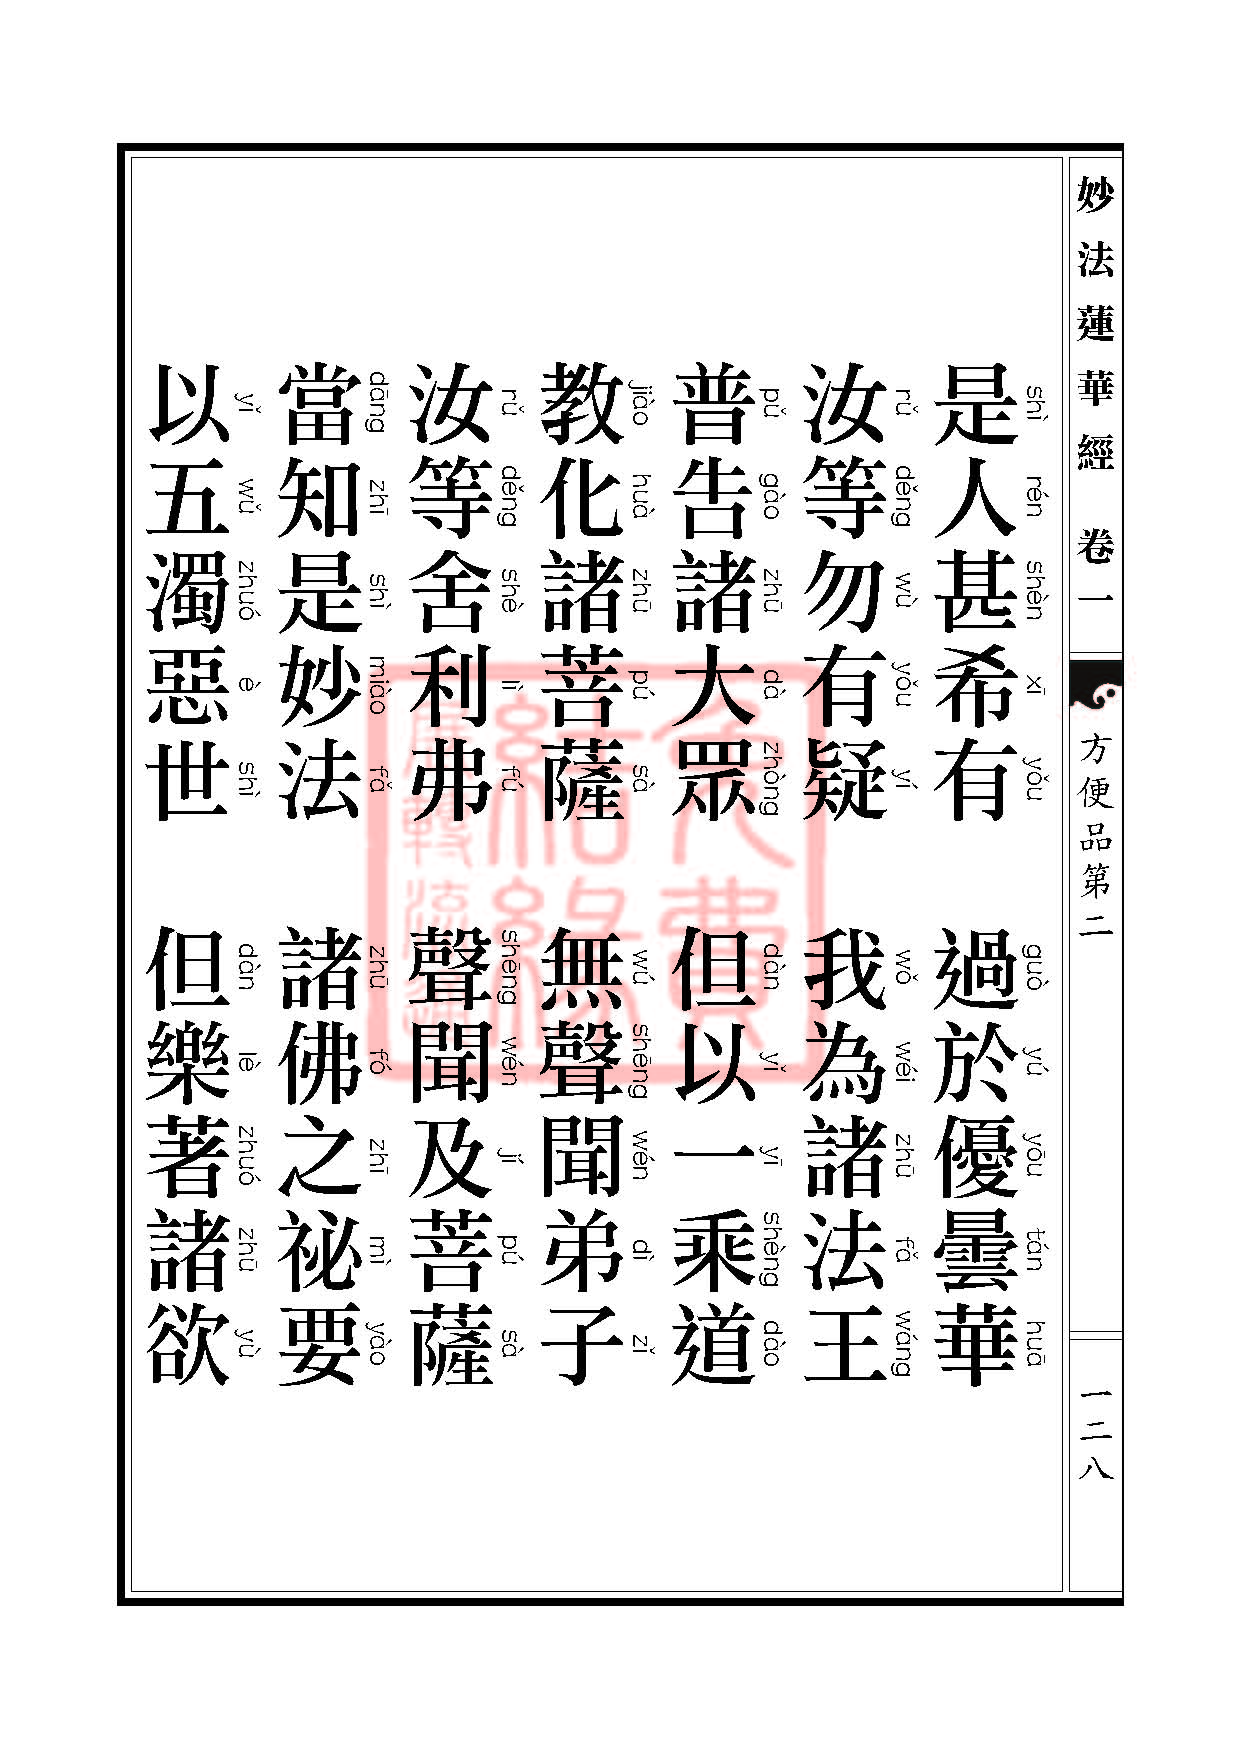 Book_FHJ_HK-A6-PY_Web_页面_128.jpg